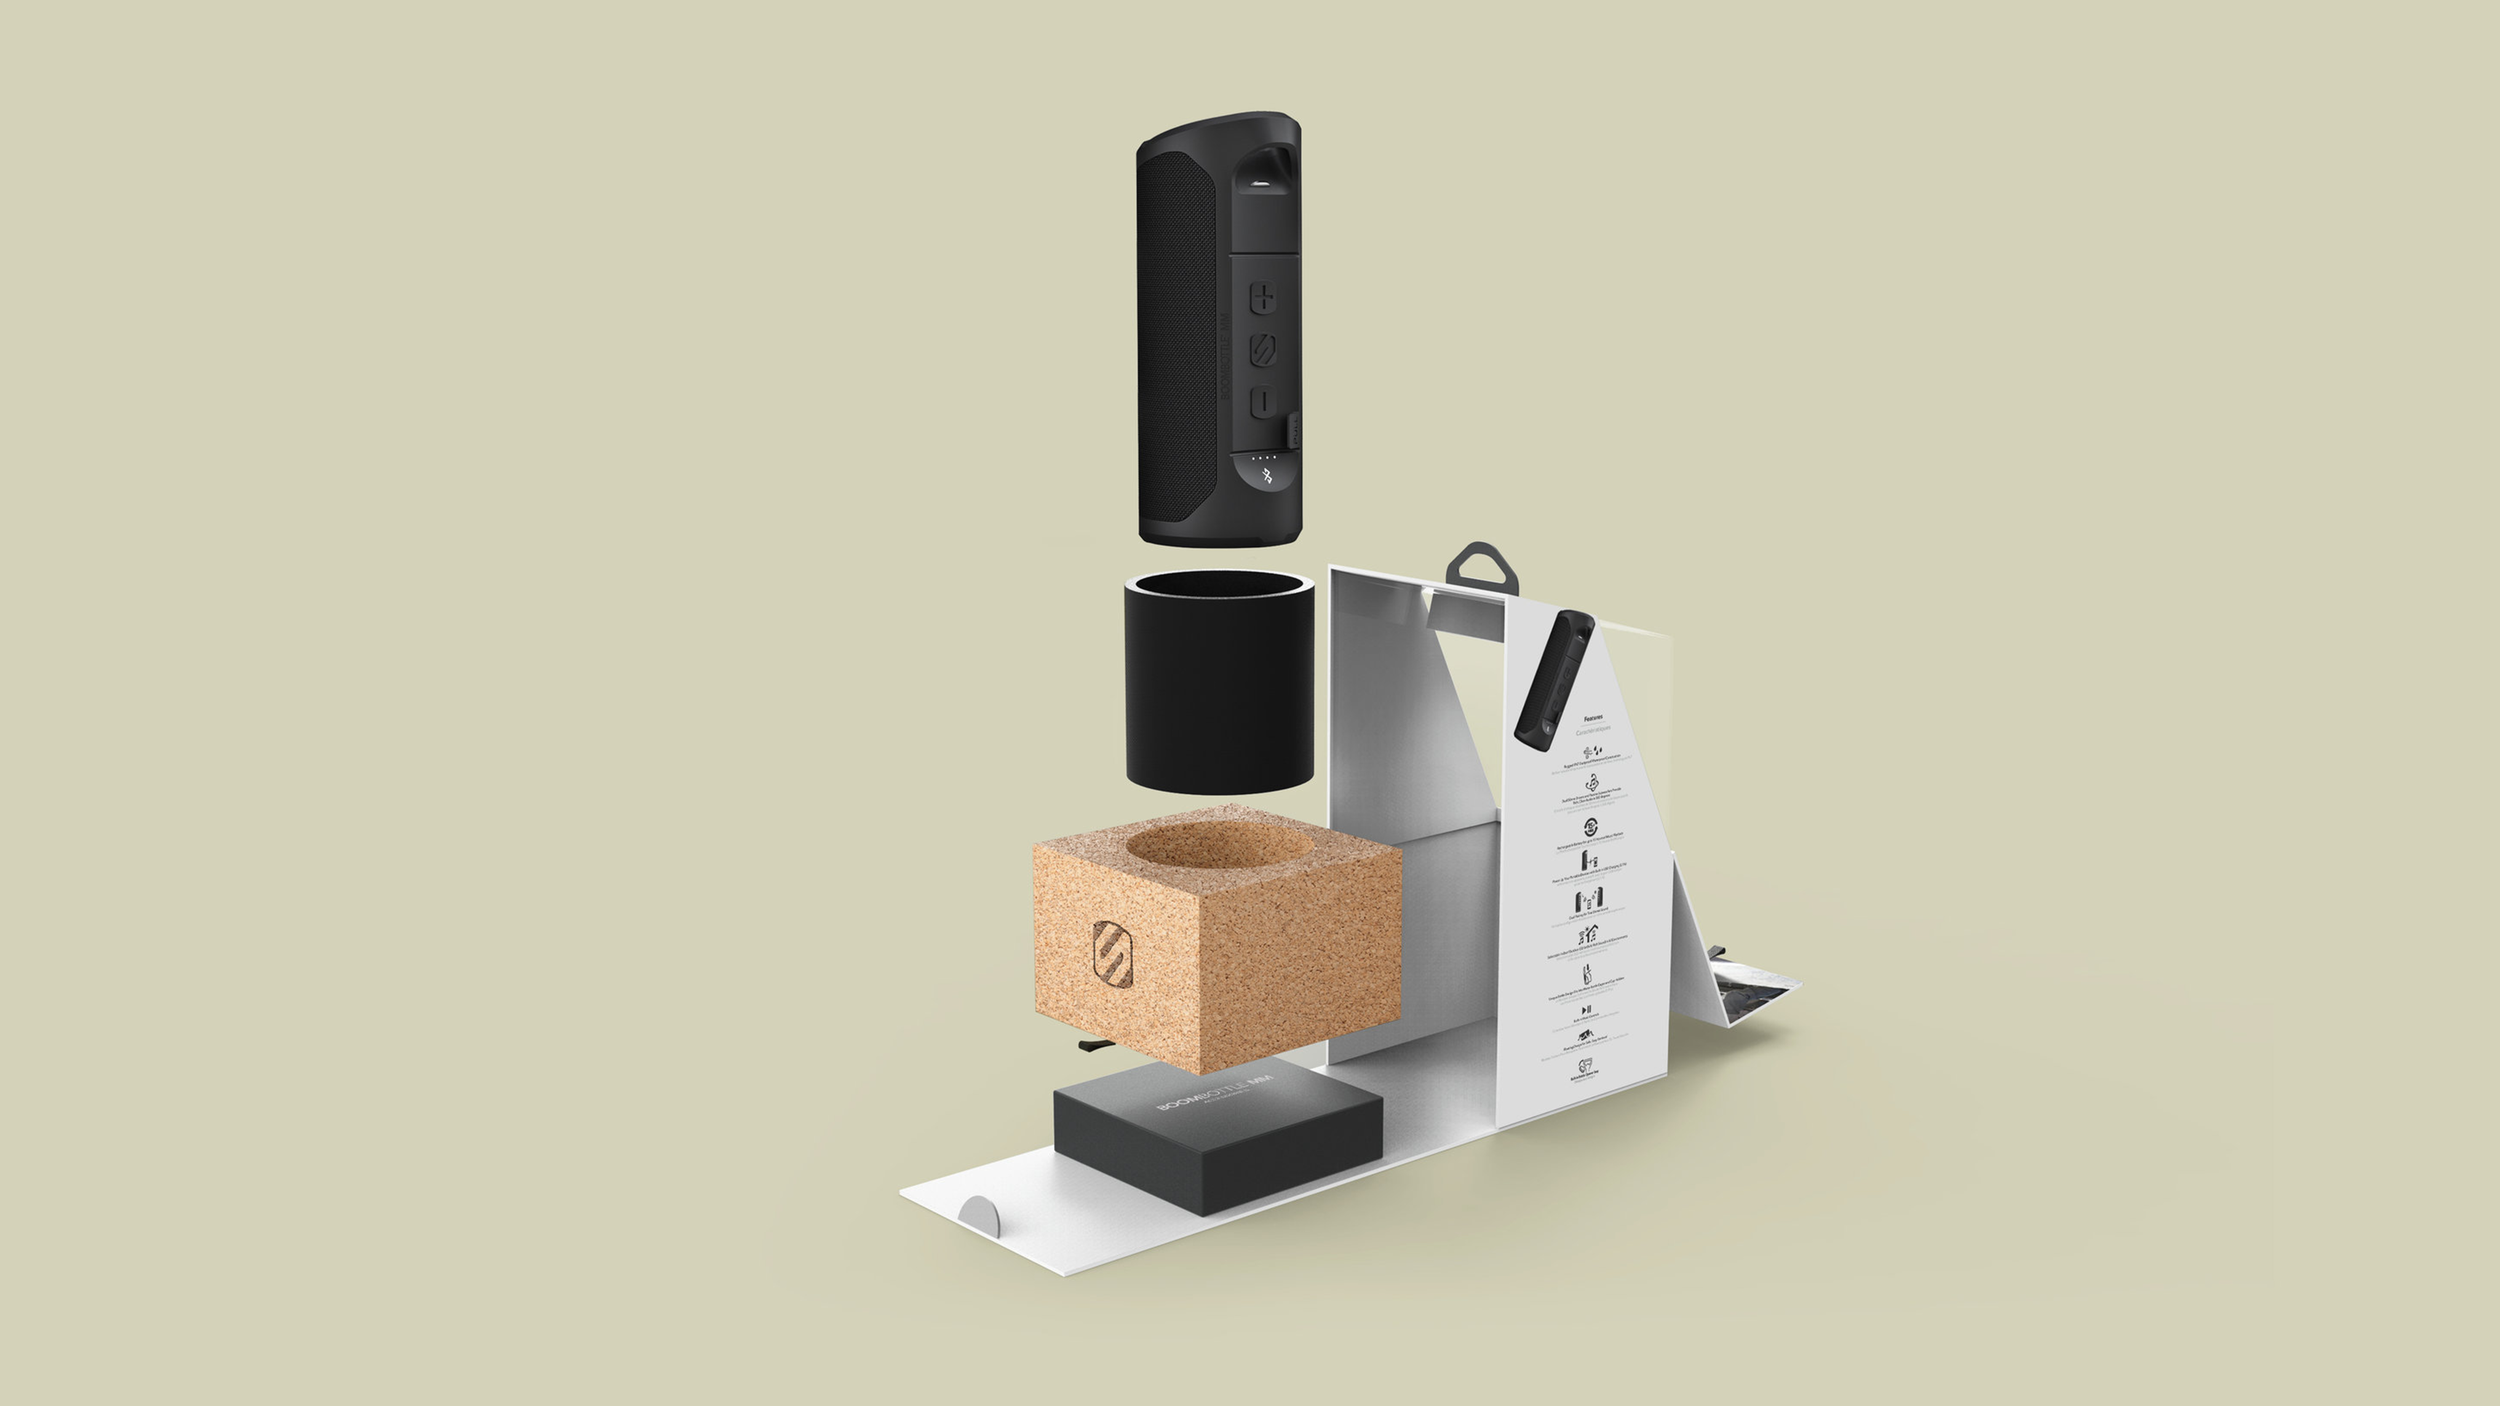 Scosche Speaker_Packaging 2.png